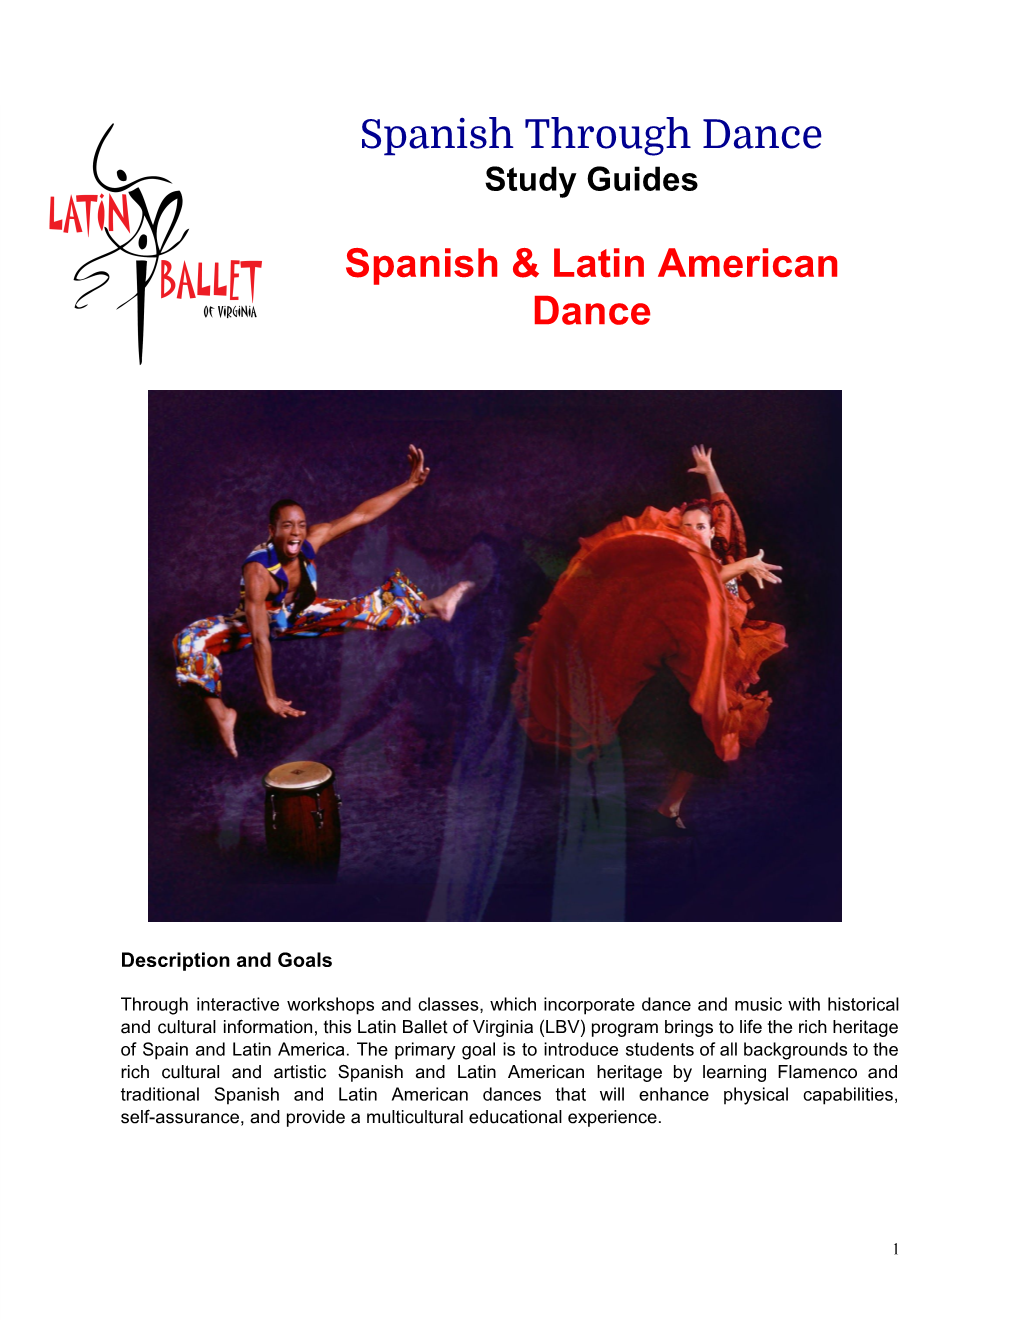 Spanish & Latin American Dance